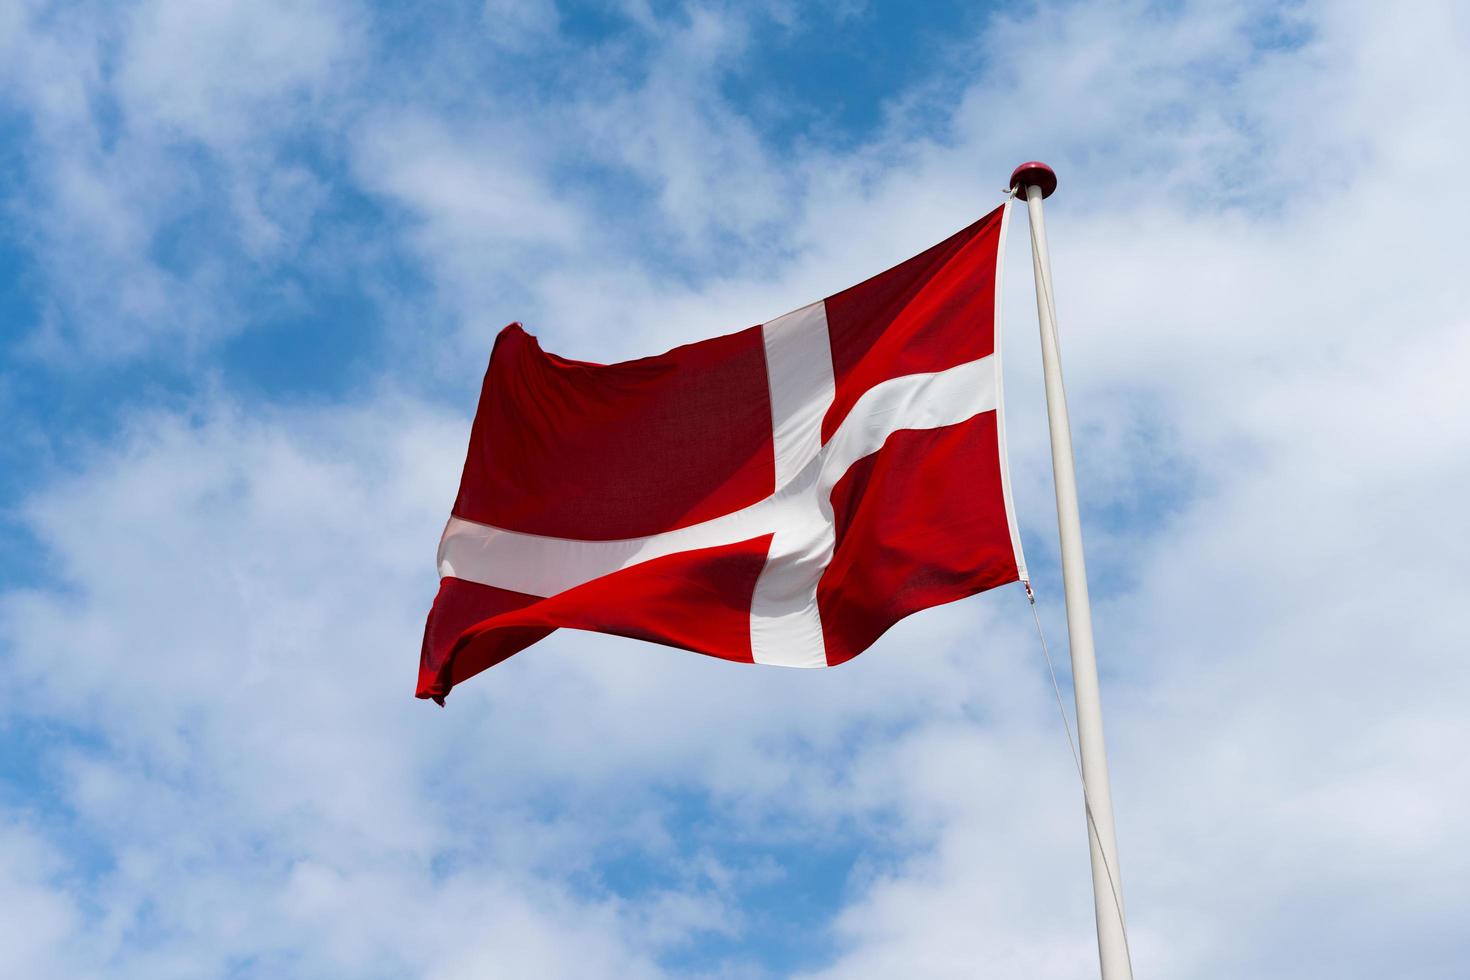 danska flaggan vajar i vinden foto